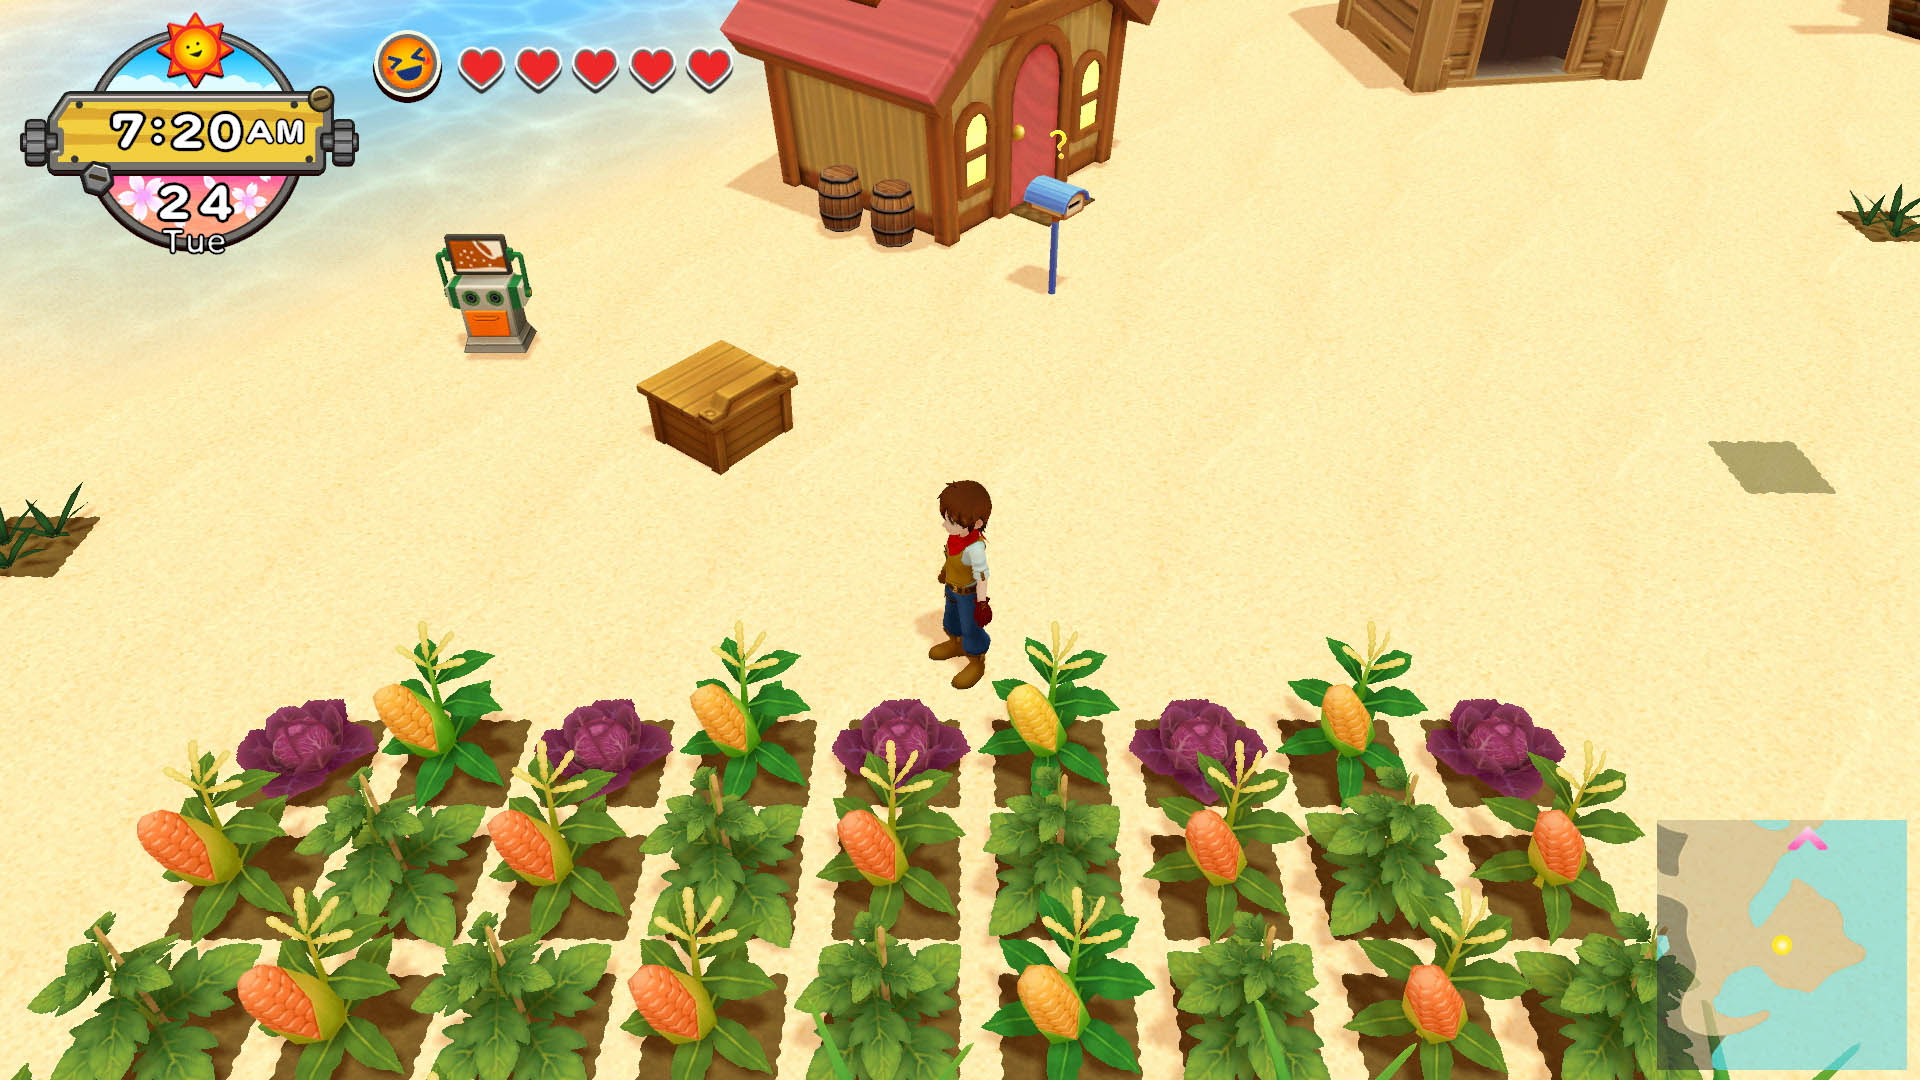 Harvest Moon: | Switch games Games | | World Nintendo One Nintendo